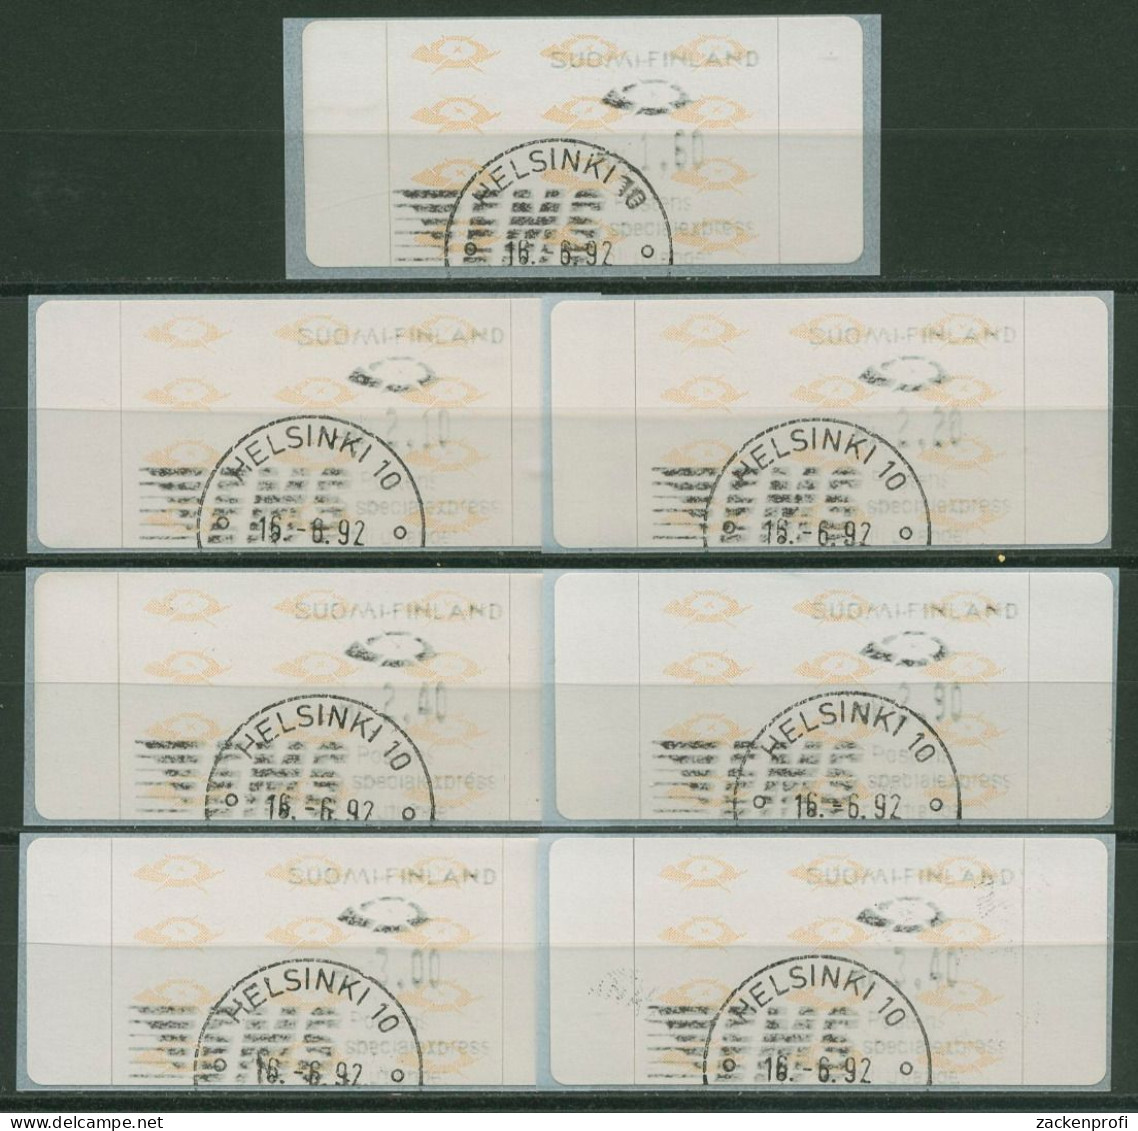 Finnland Automatenmarken 1992 Posthörner Satz 7 Werte ATM 12.2 S 1 Gestempelt - Timbres De Distributeurs [ATM]